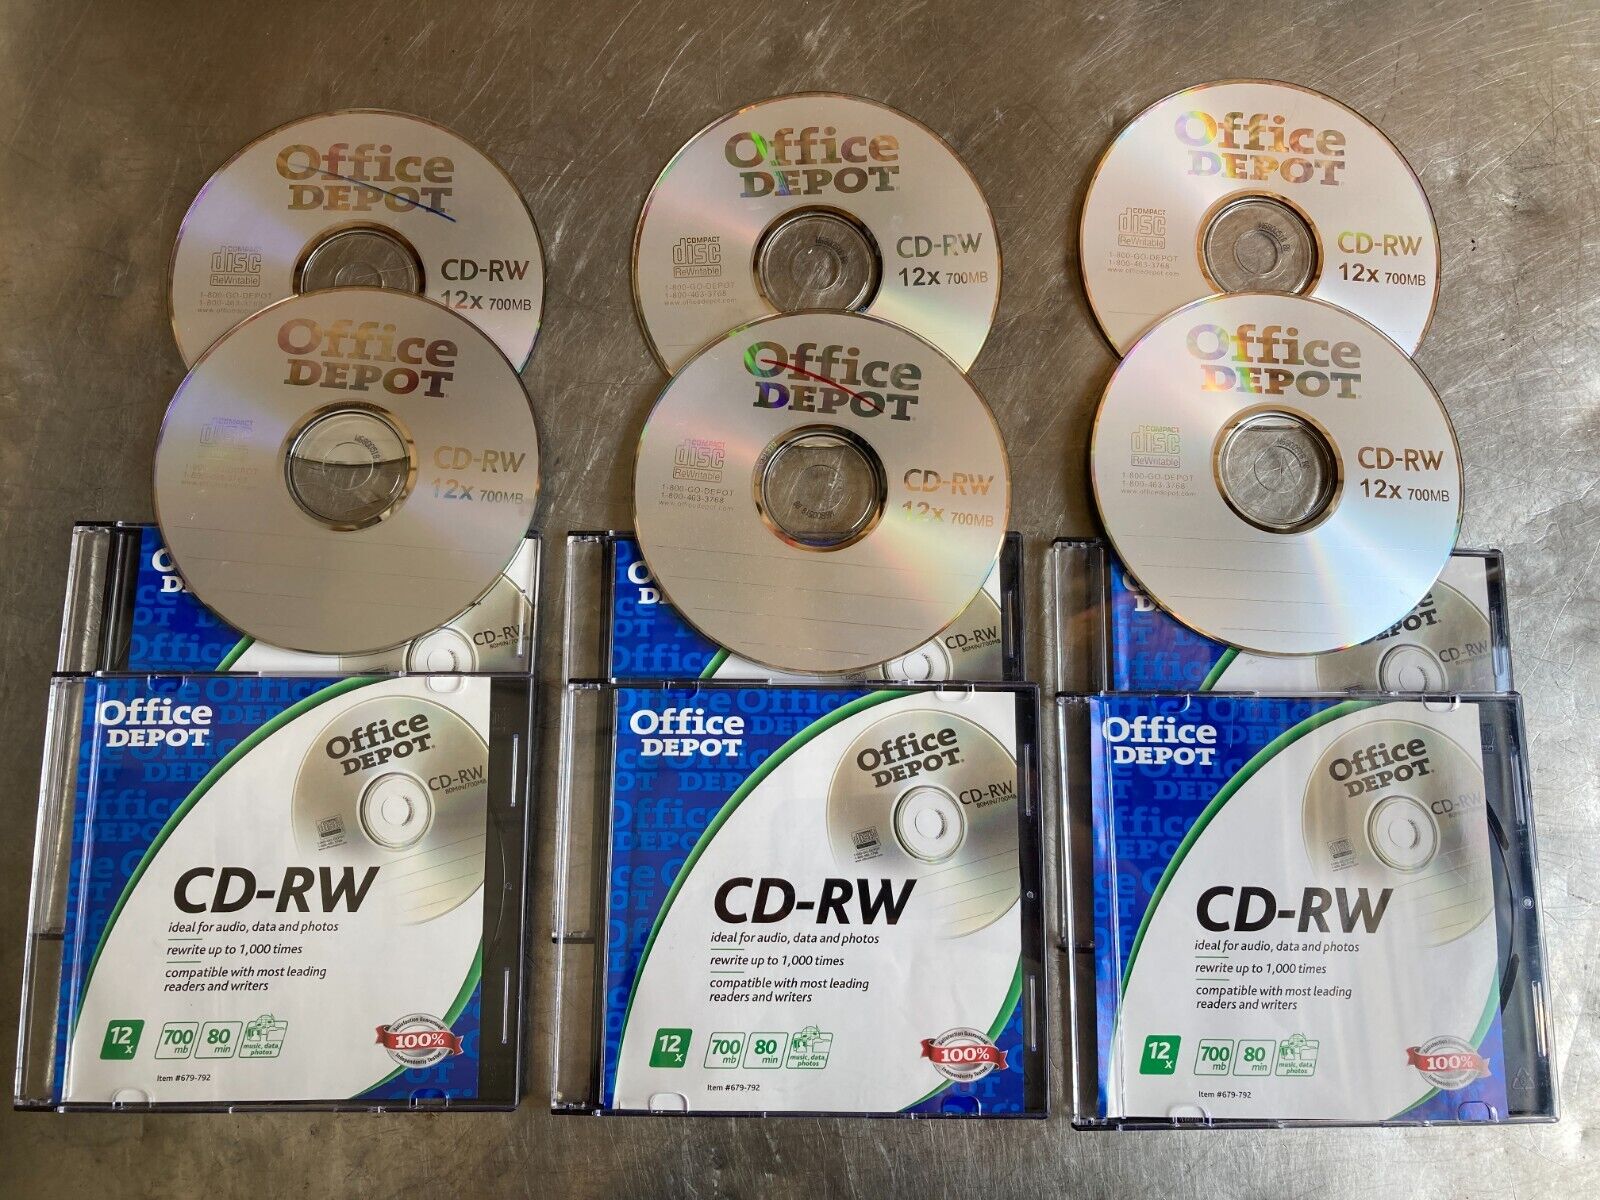 Qty 6 NEW Office Depot CD-RW CD Disc DVD 12x 700mb 80 min Rewritable E5631